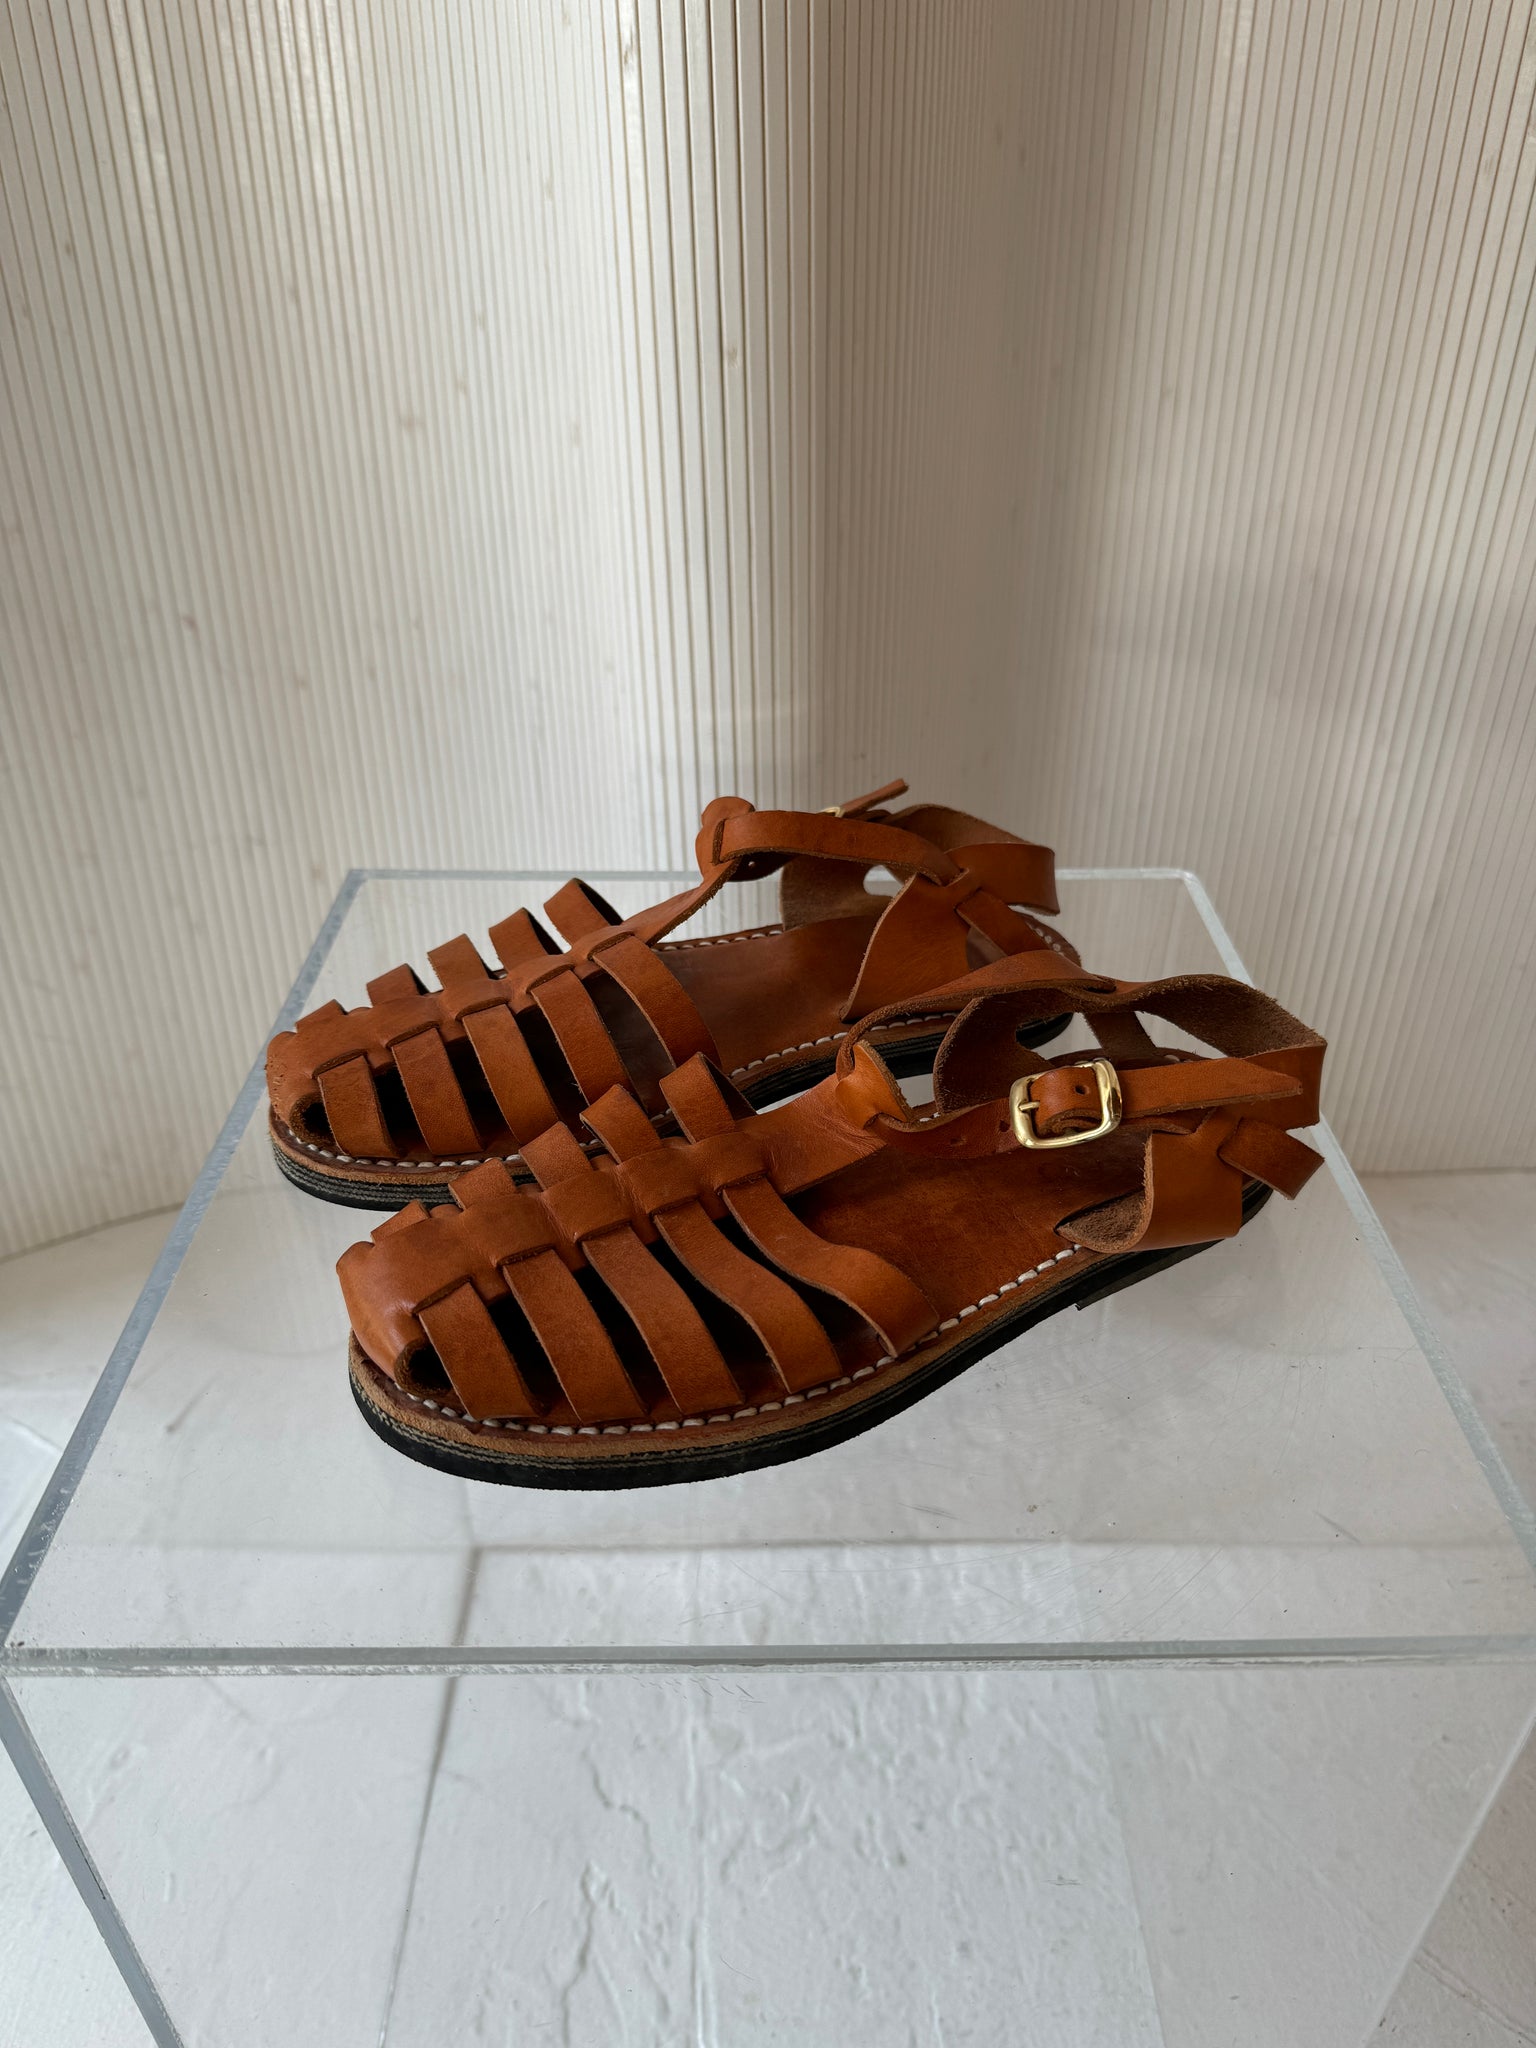 Handmade brown leather sandal